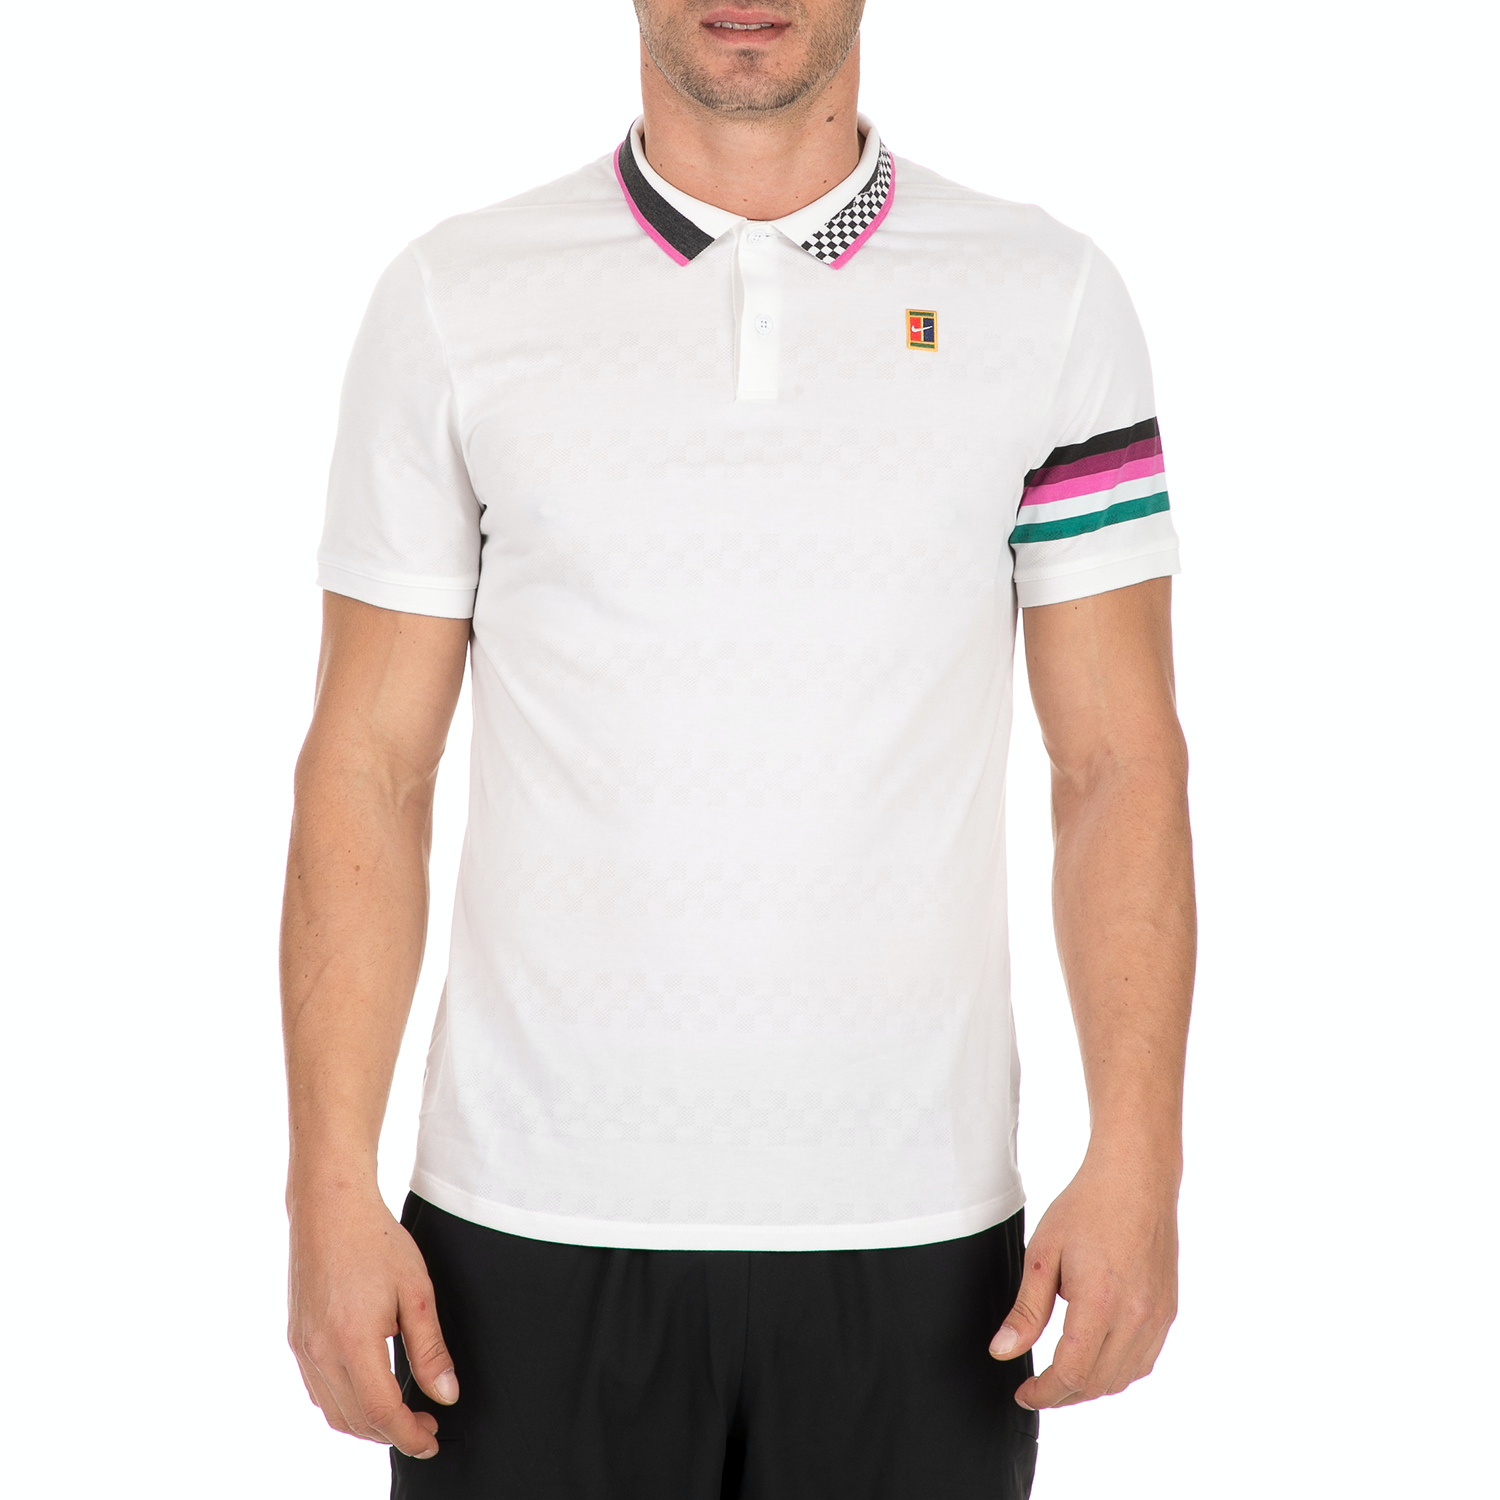 NIKE - Ανδρική μπλούζα τένις NIKE ADV POLO MB λευκή Ανδρικά/Ρούχα/Αθλητικά/T-shirt